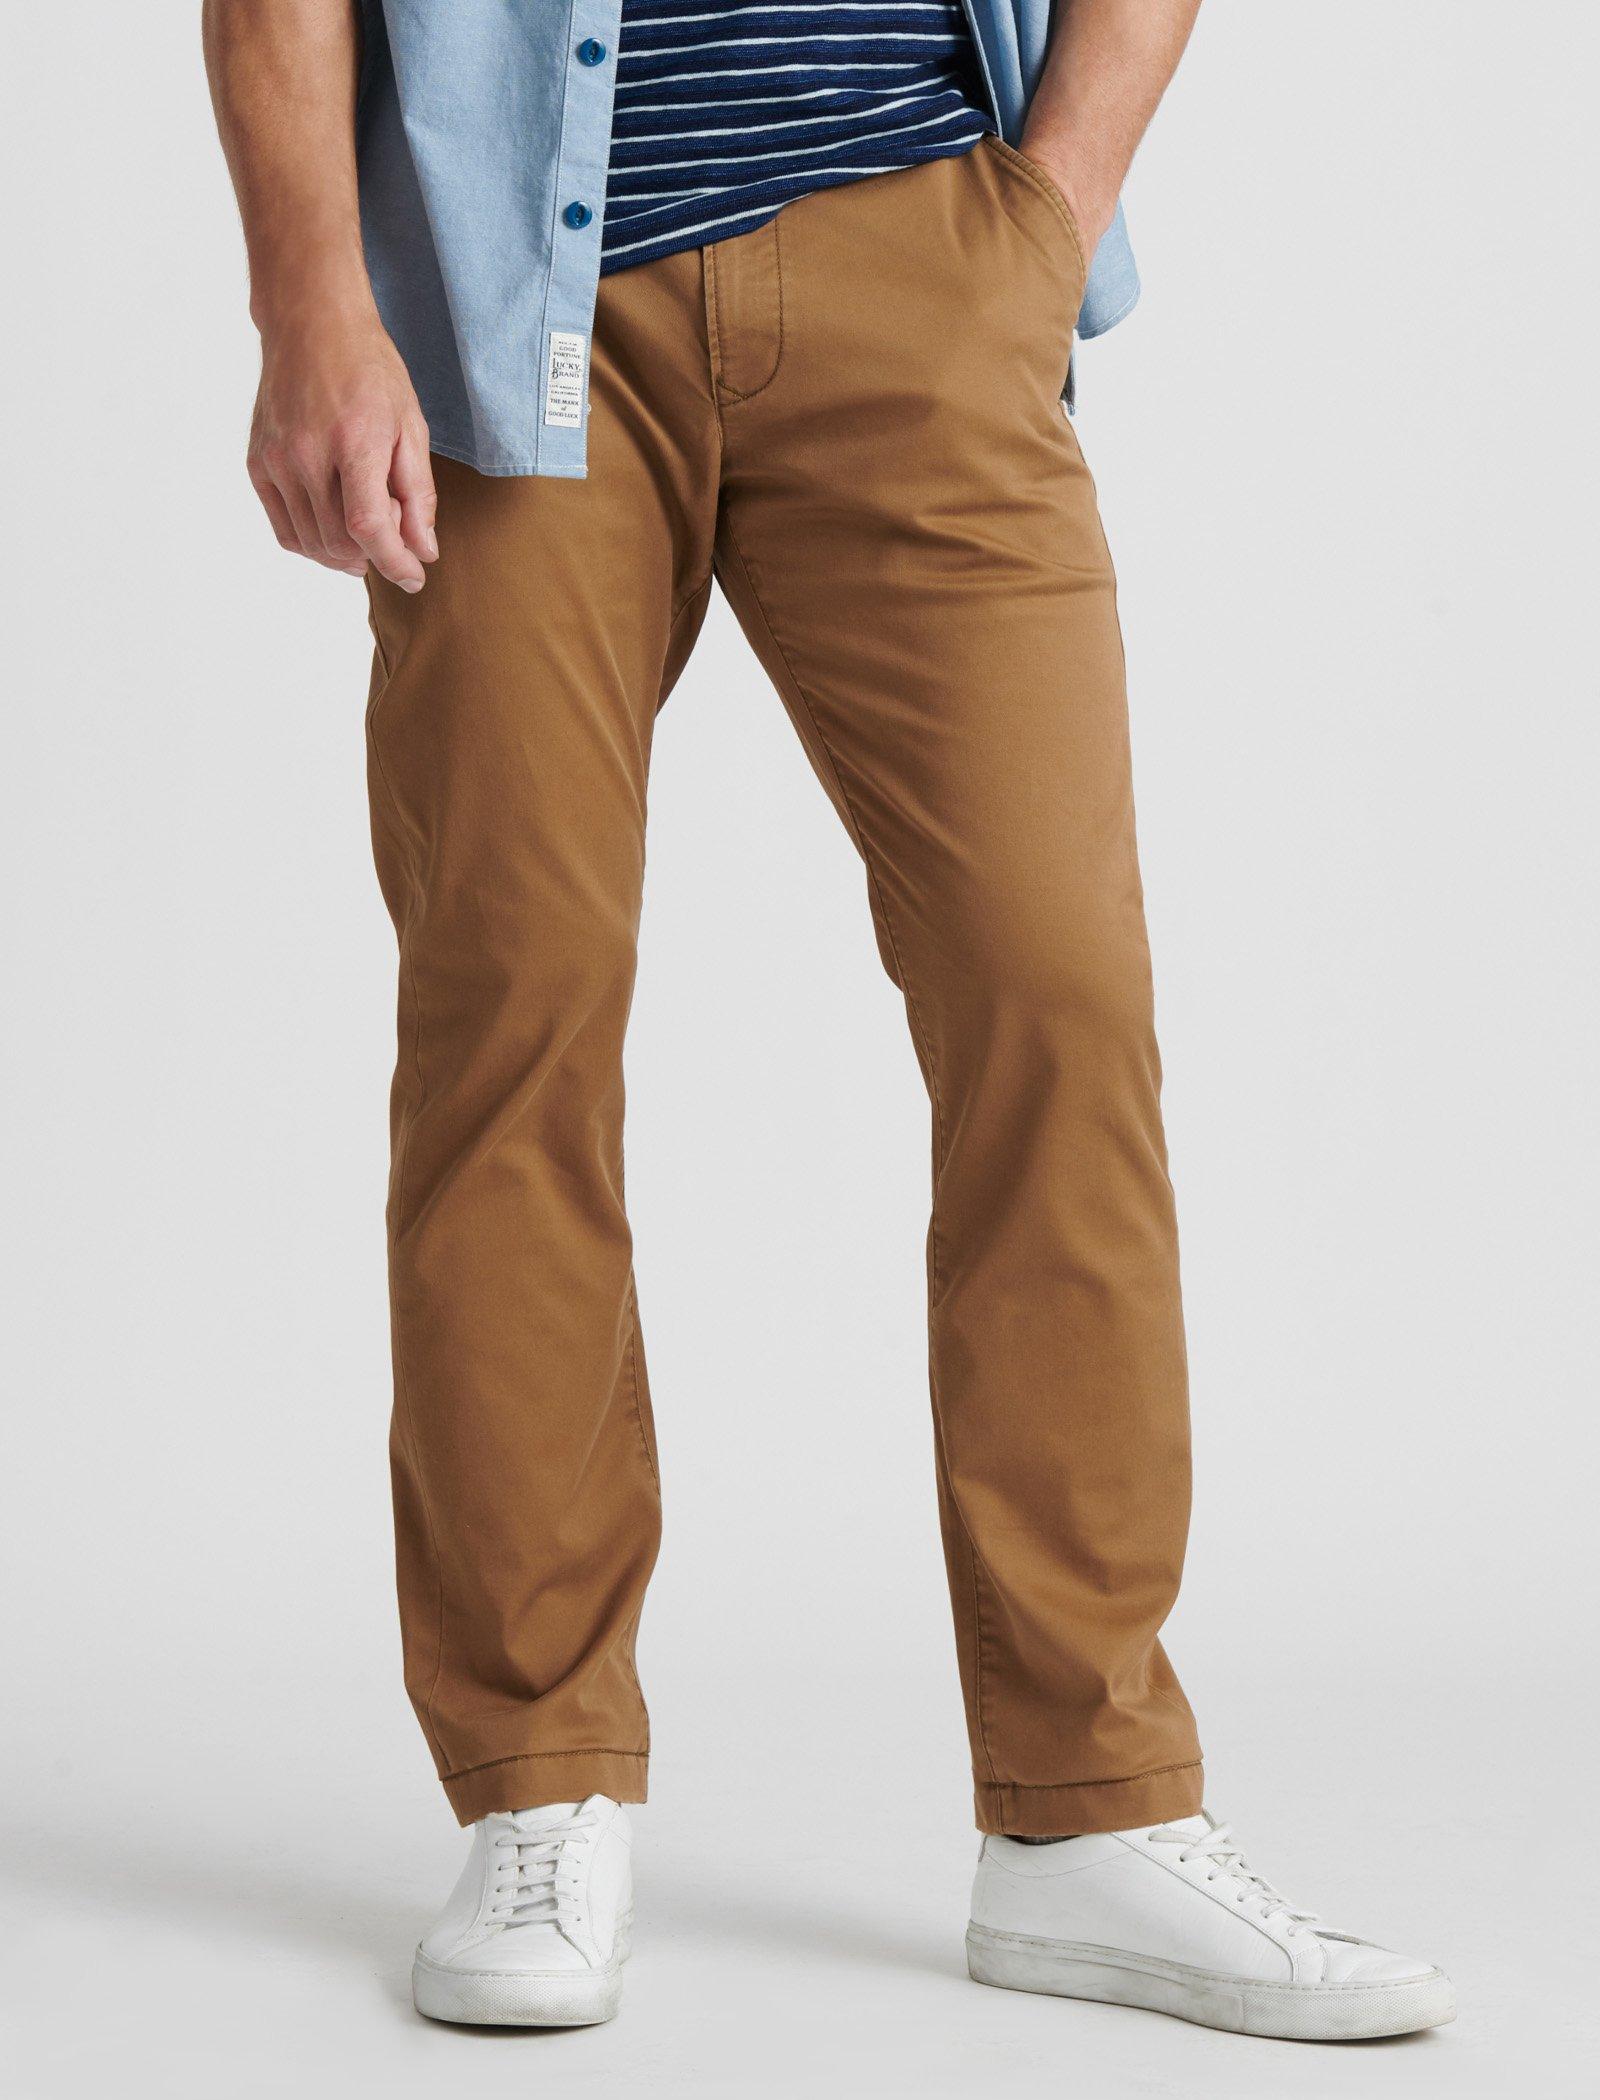 lucky brand men's pants